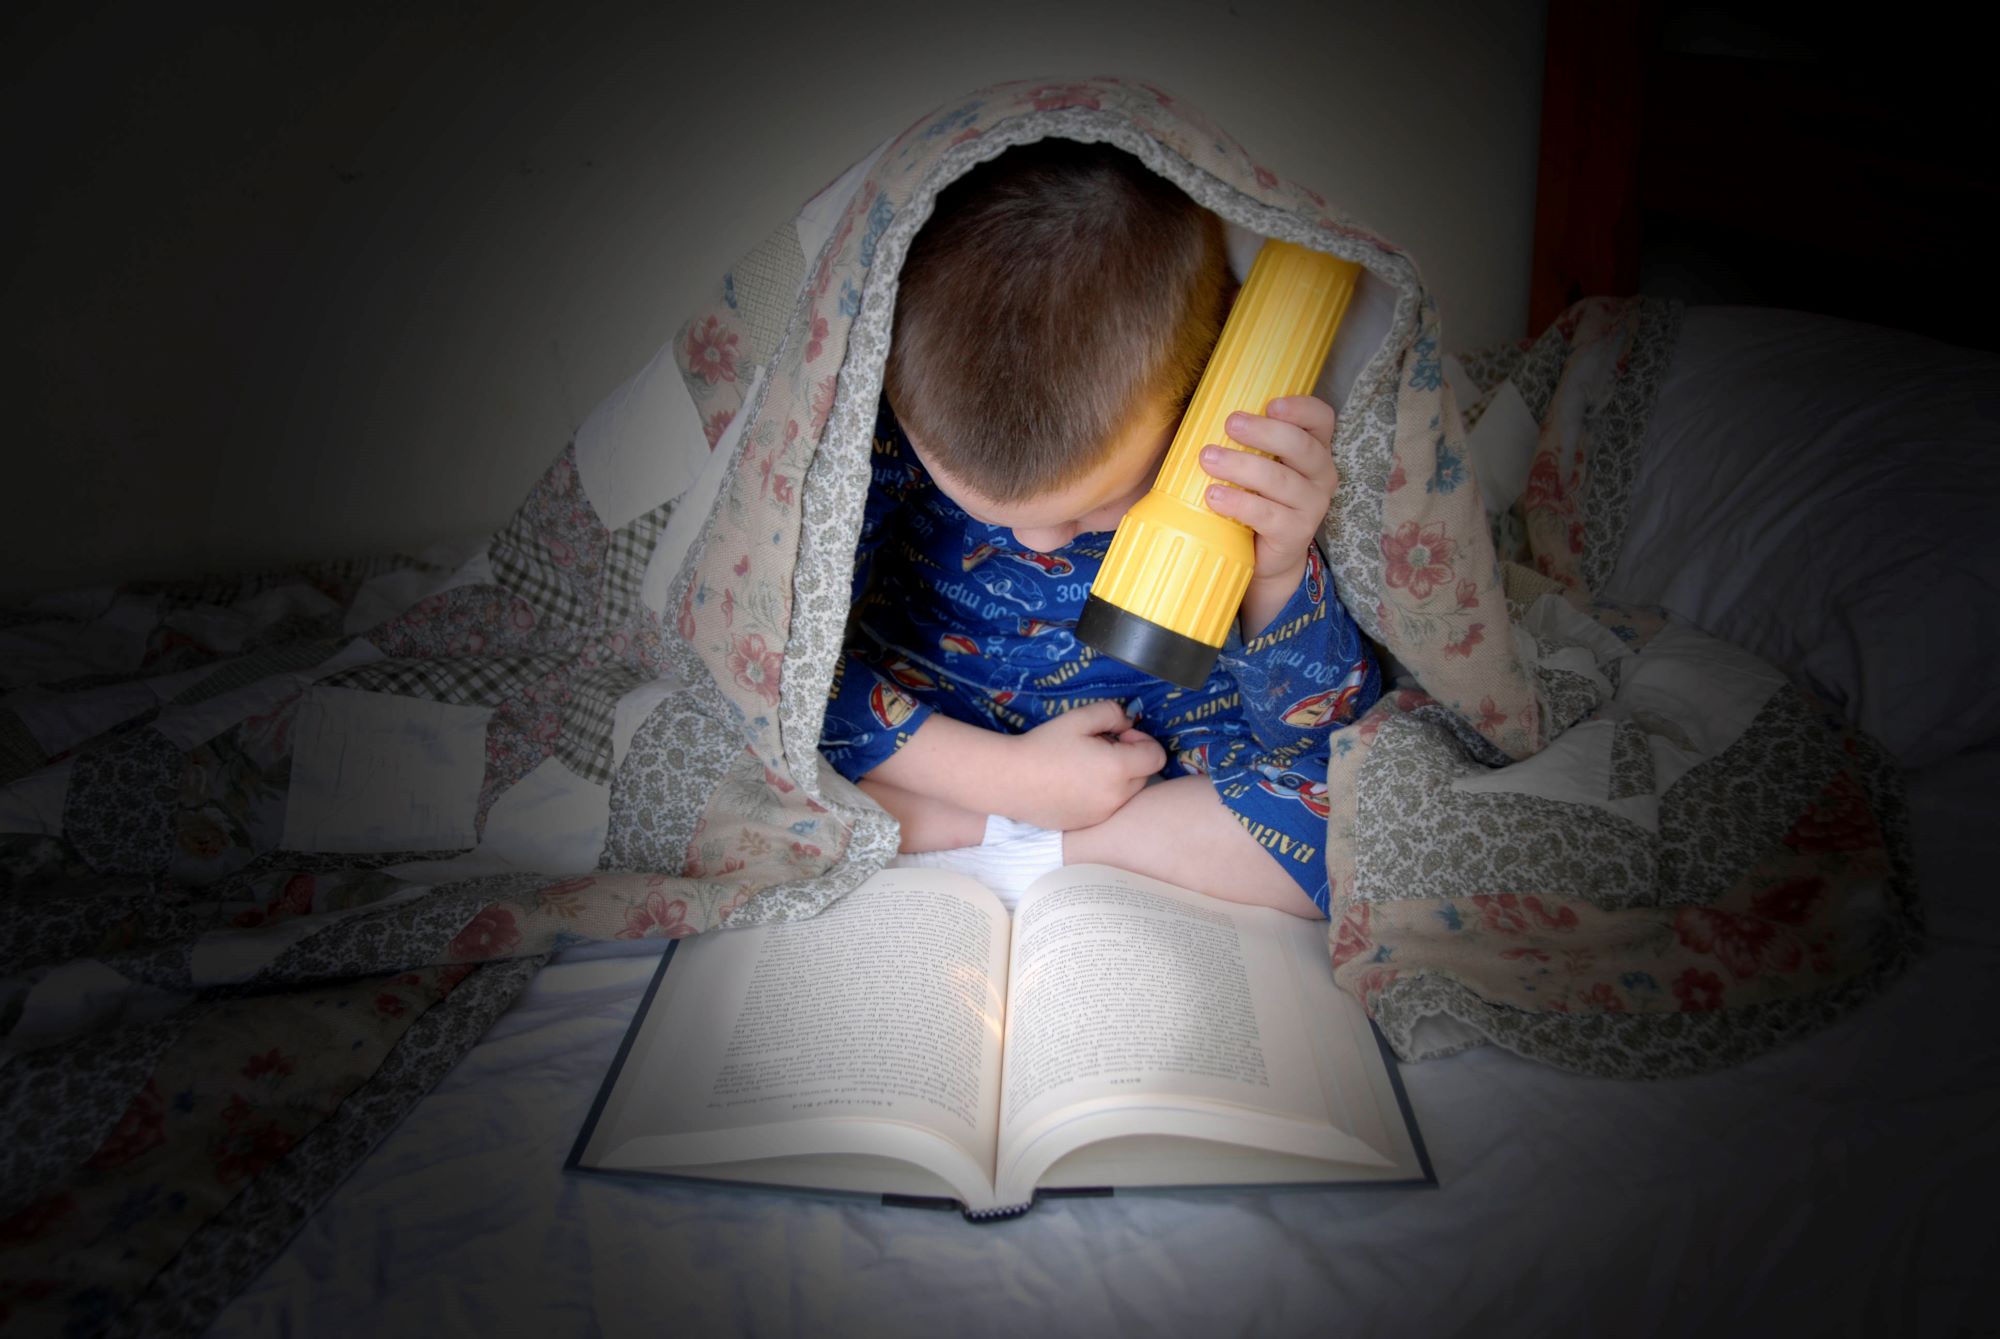 Boy reading a book under a blanket using a flashlight